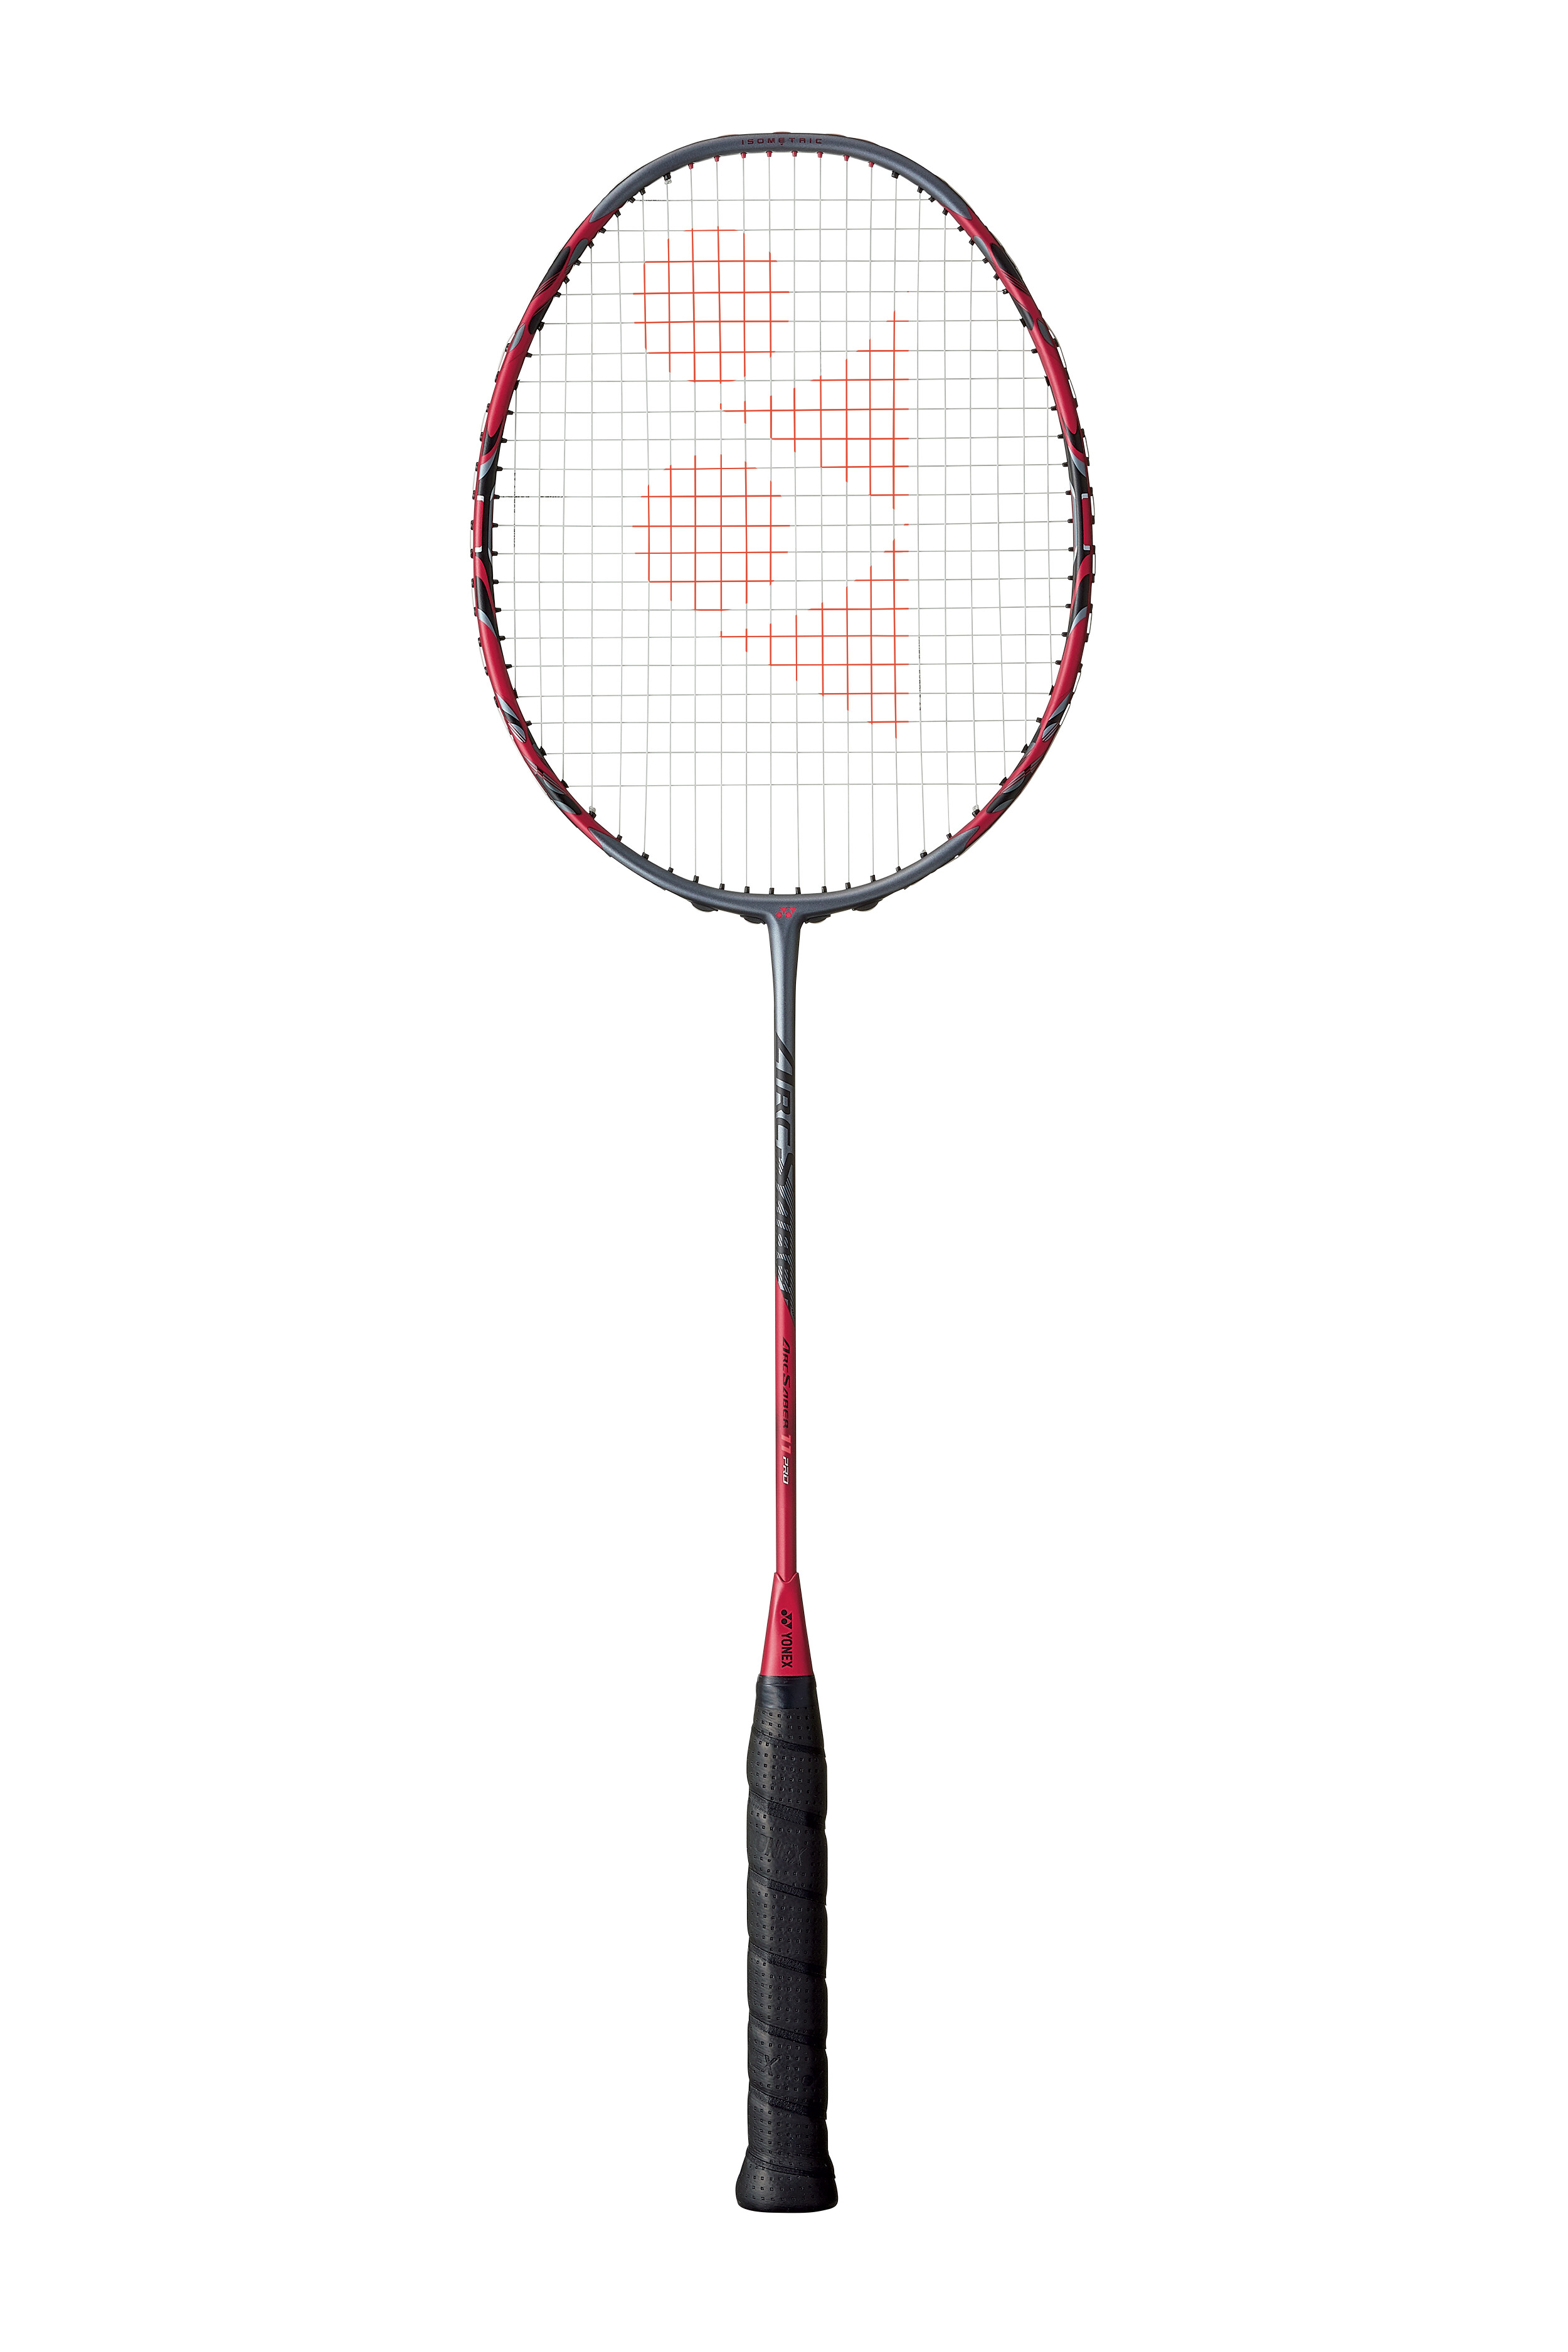 YONEX ArcSaber 11 Pro 4U Badminton Racquet - Grayish Pearl - Unstrung